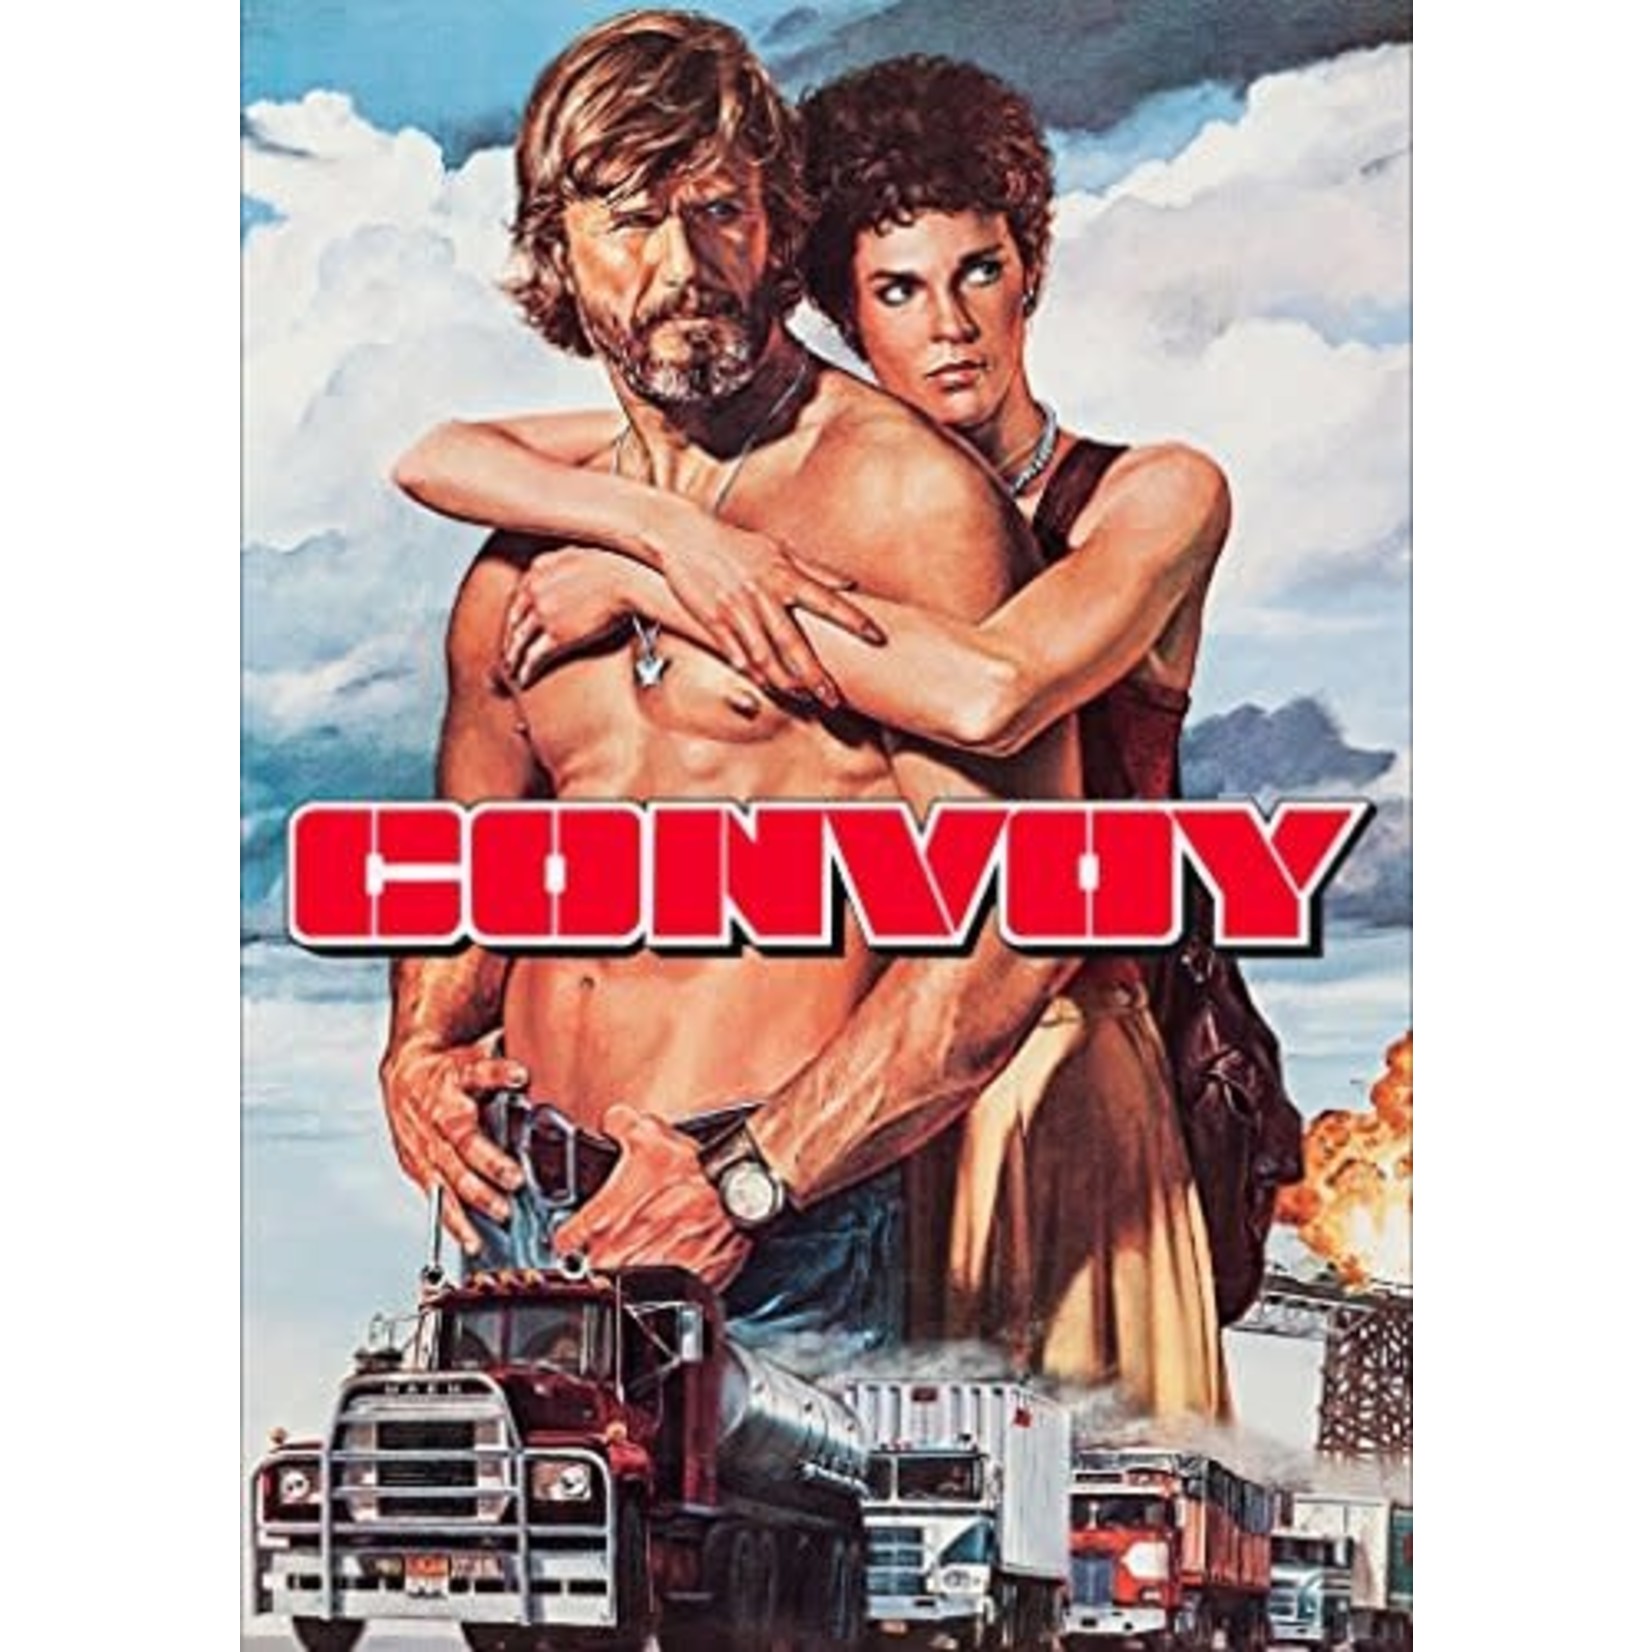 Convoy (1976) [DVD]